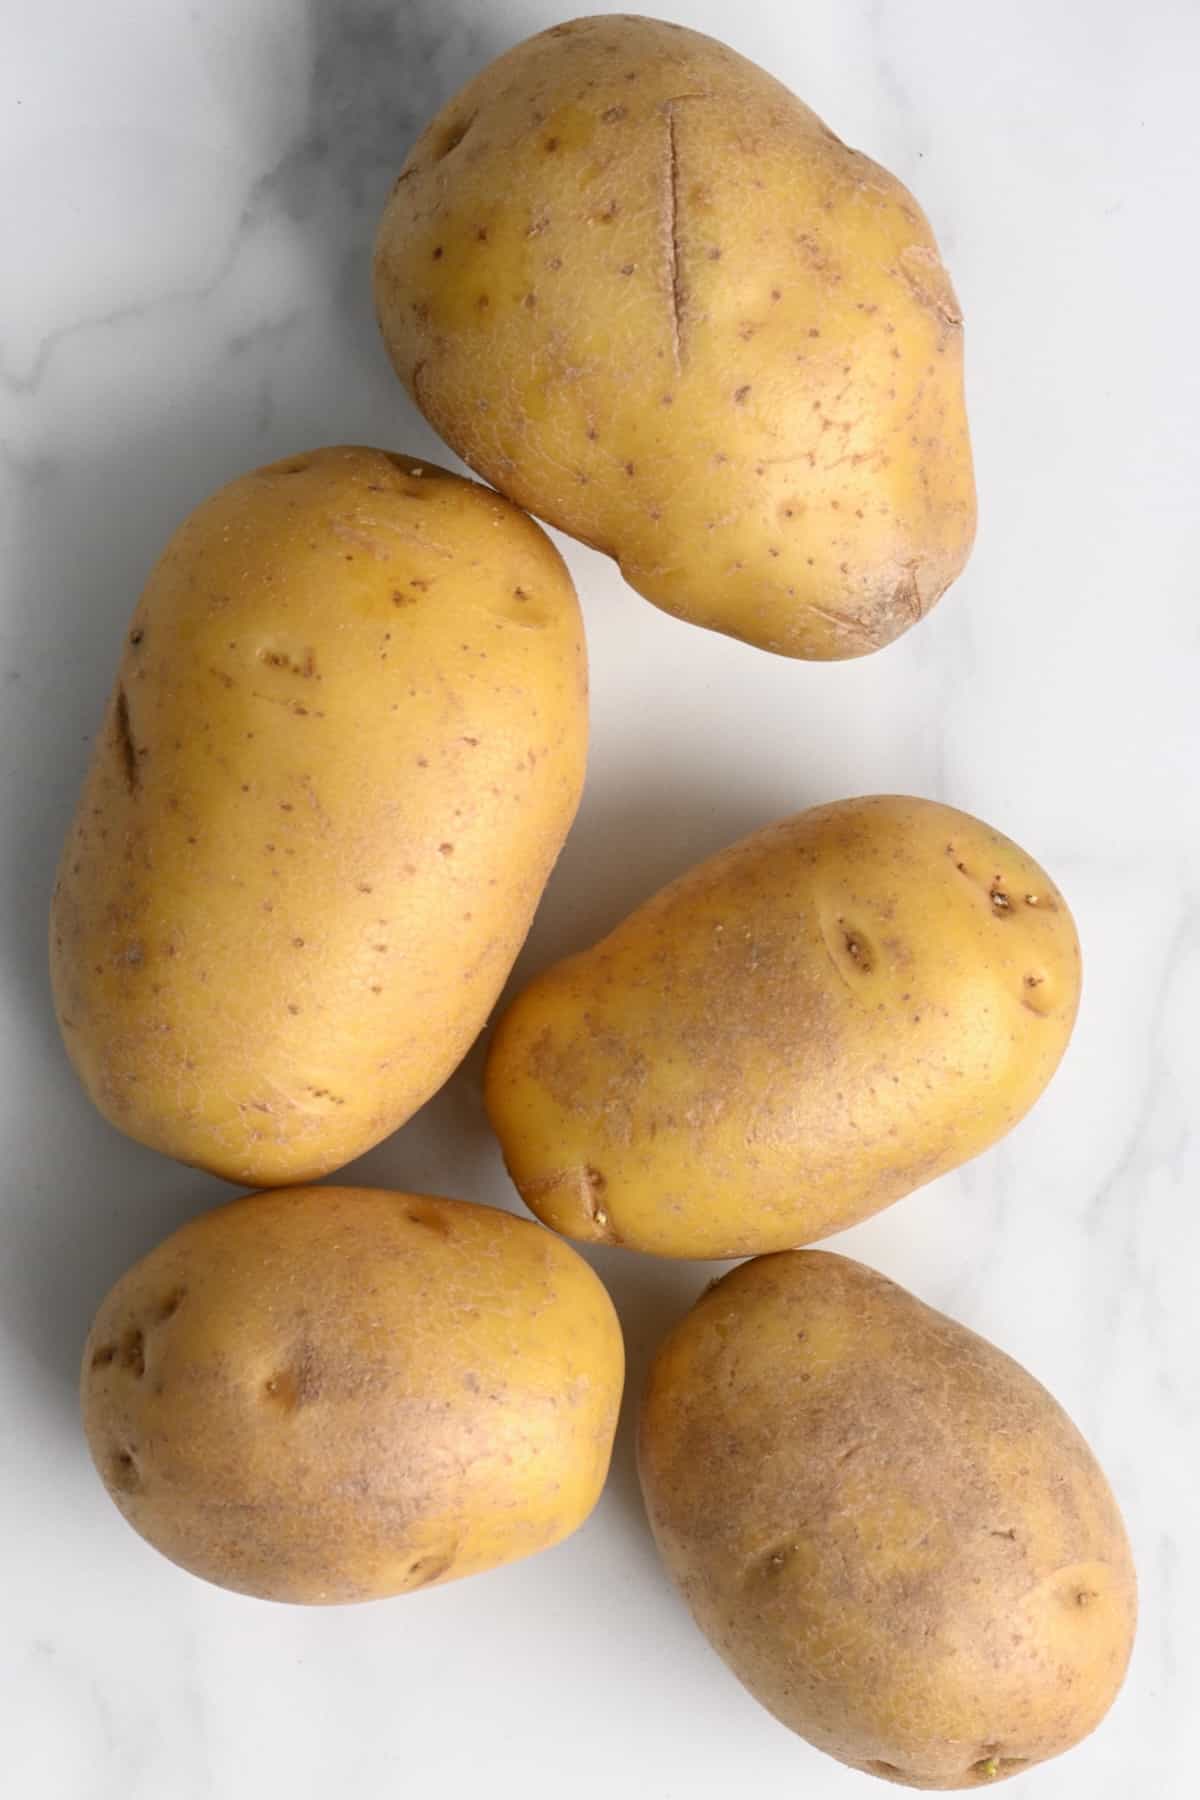 Five large potatoes